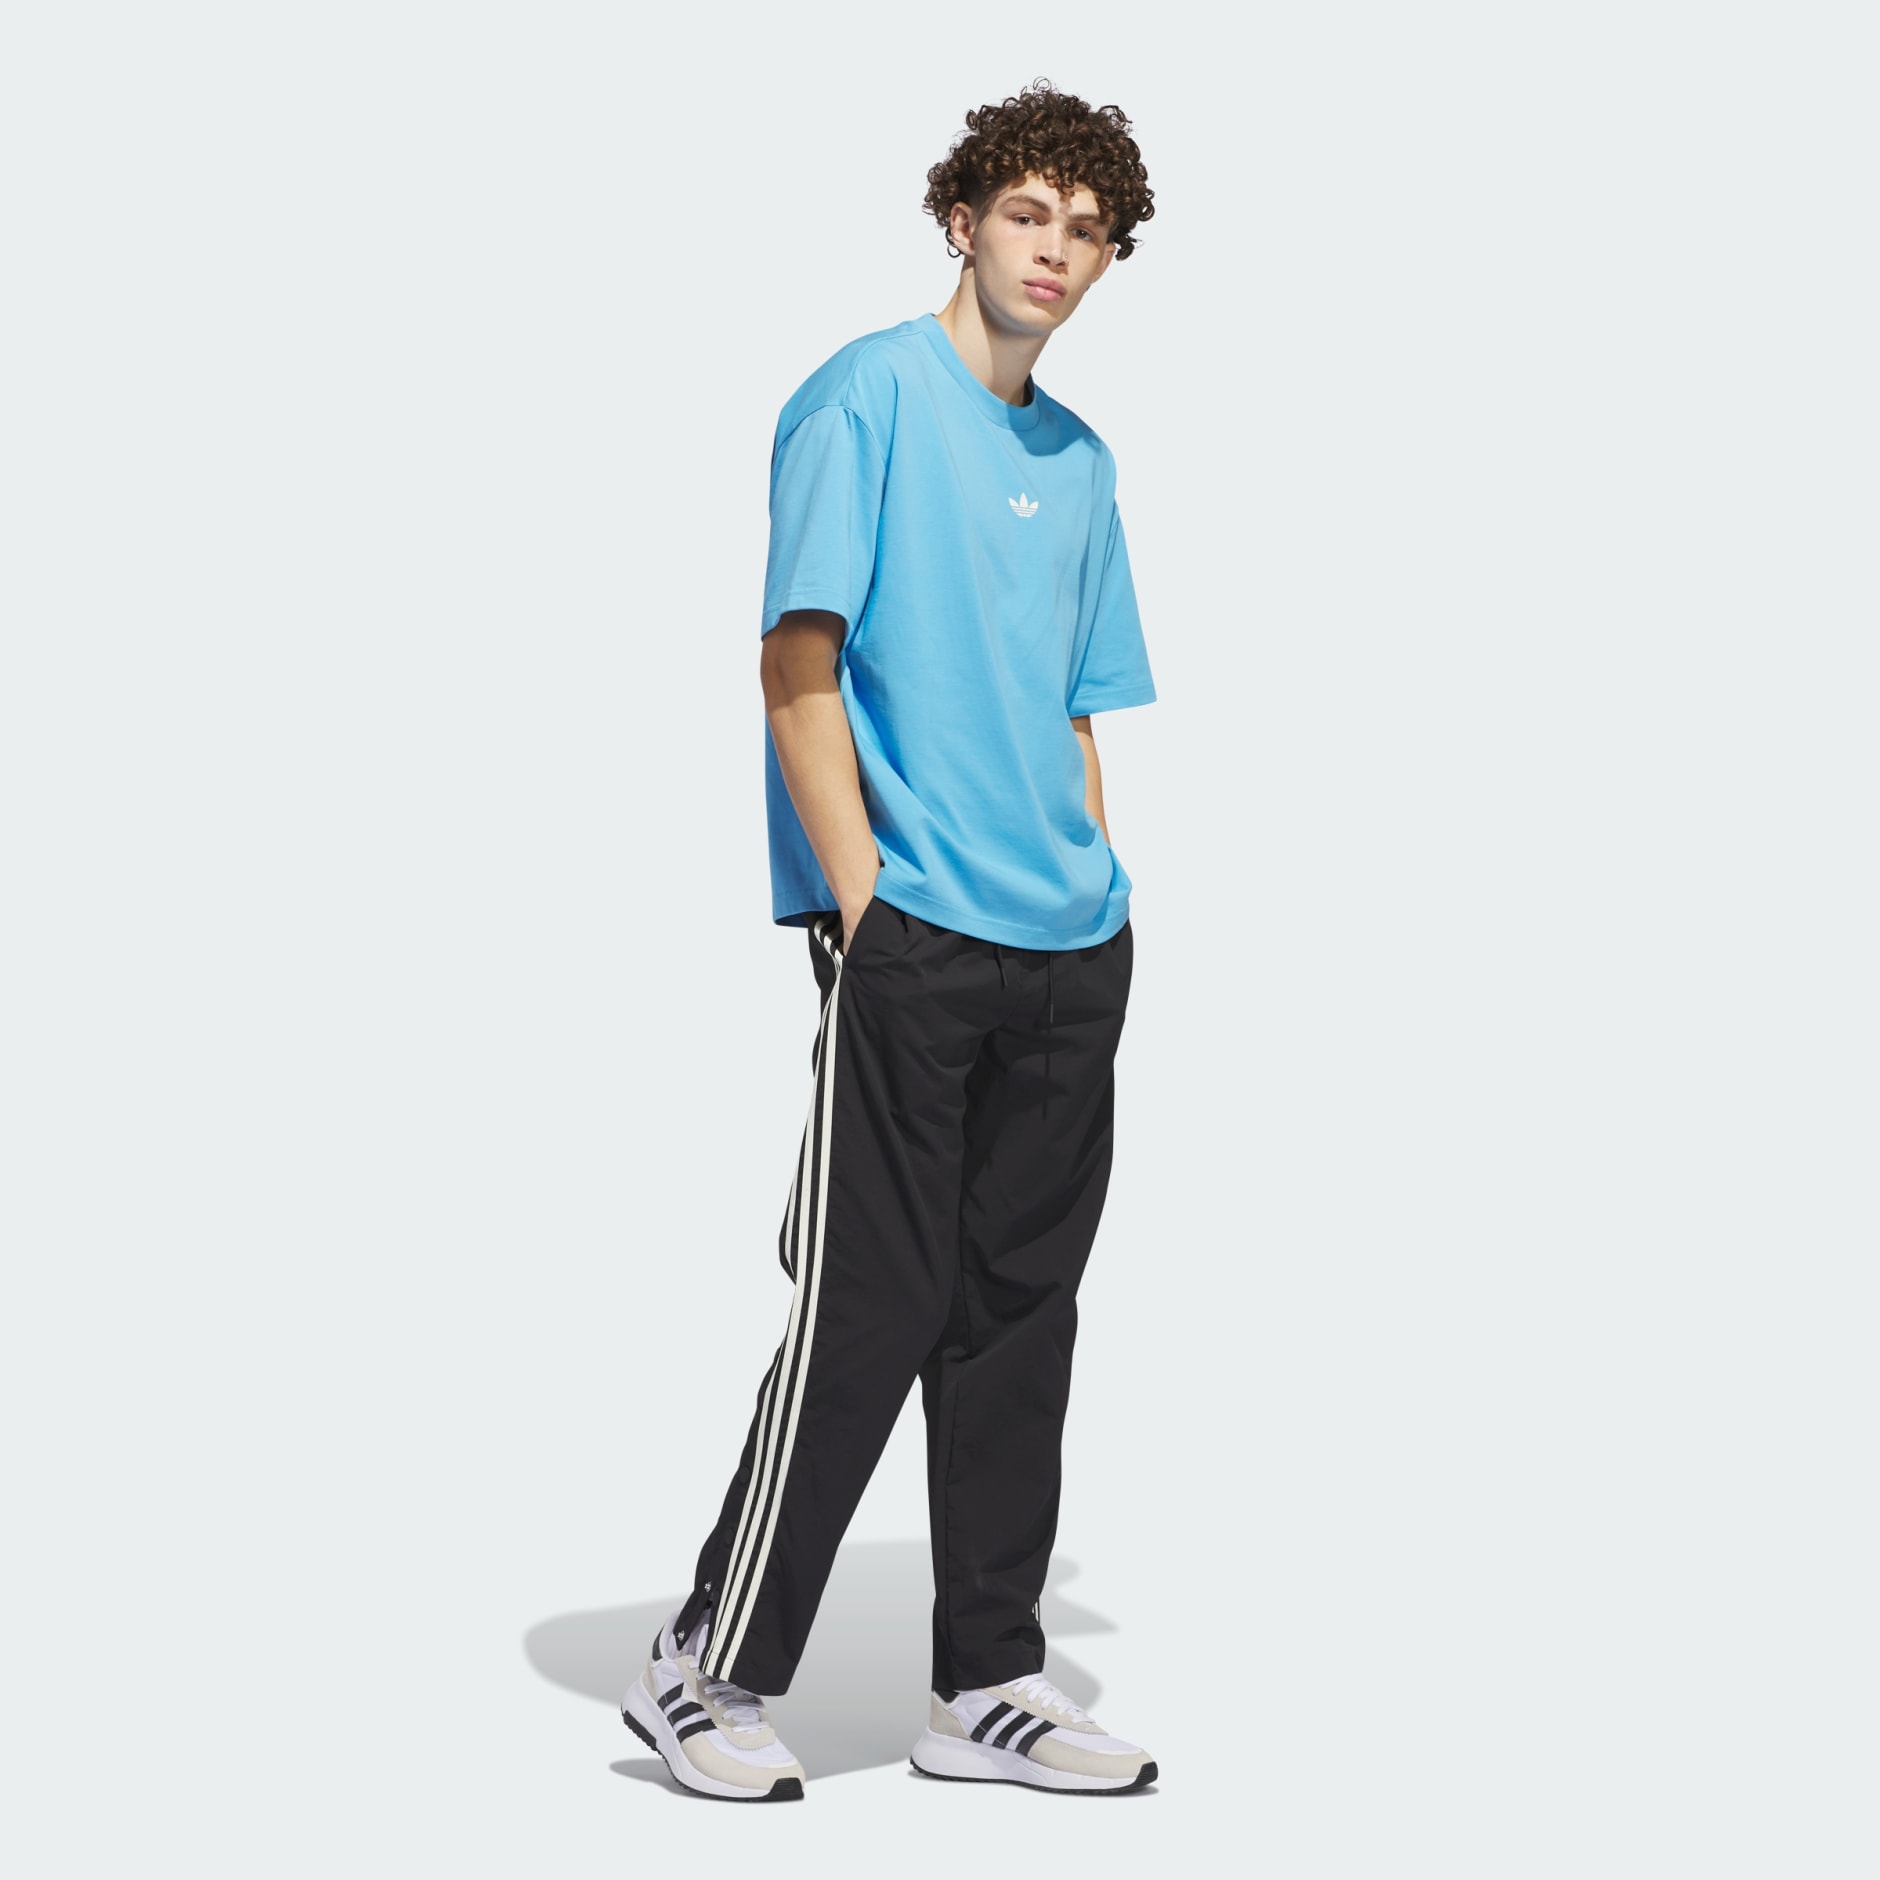 Clothing - Basketball Classic Tee (Gender Neutral) - Blue | adidas 